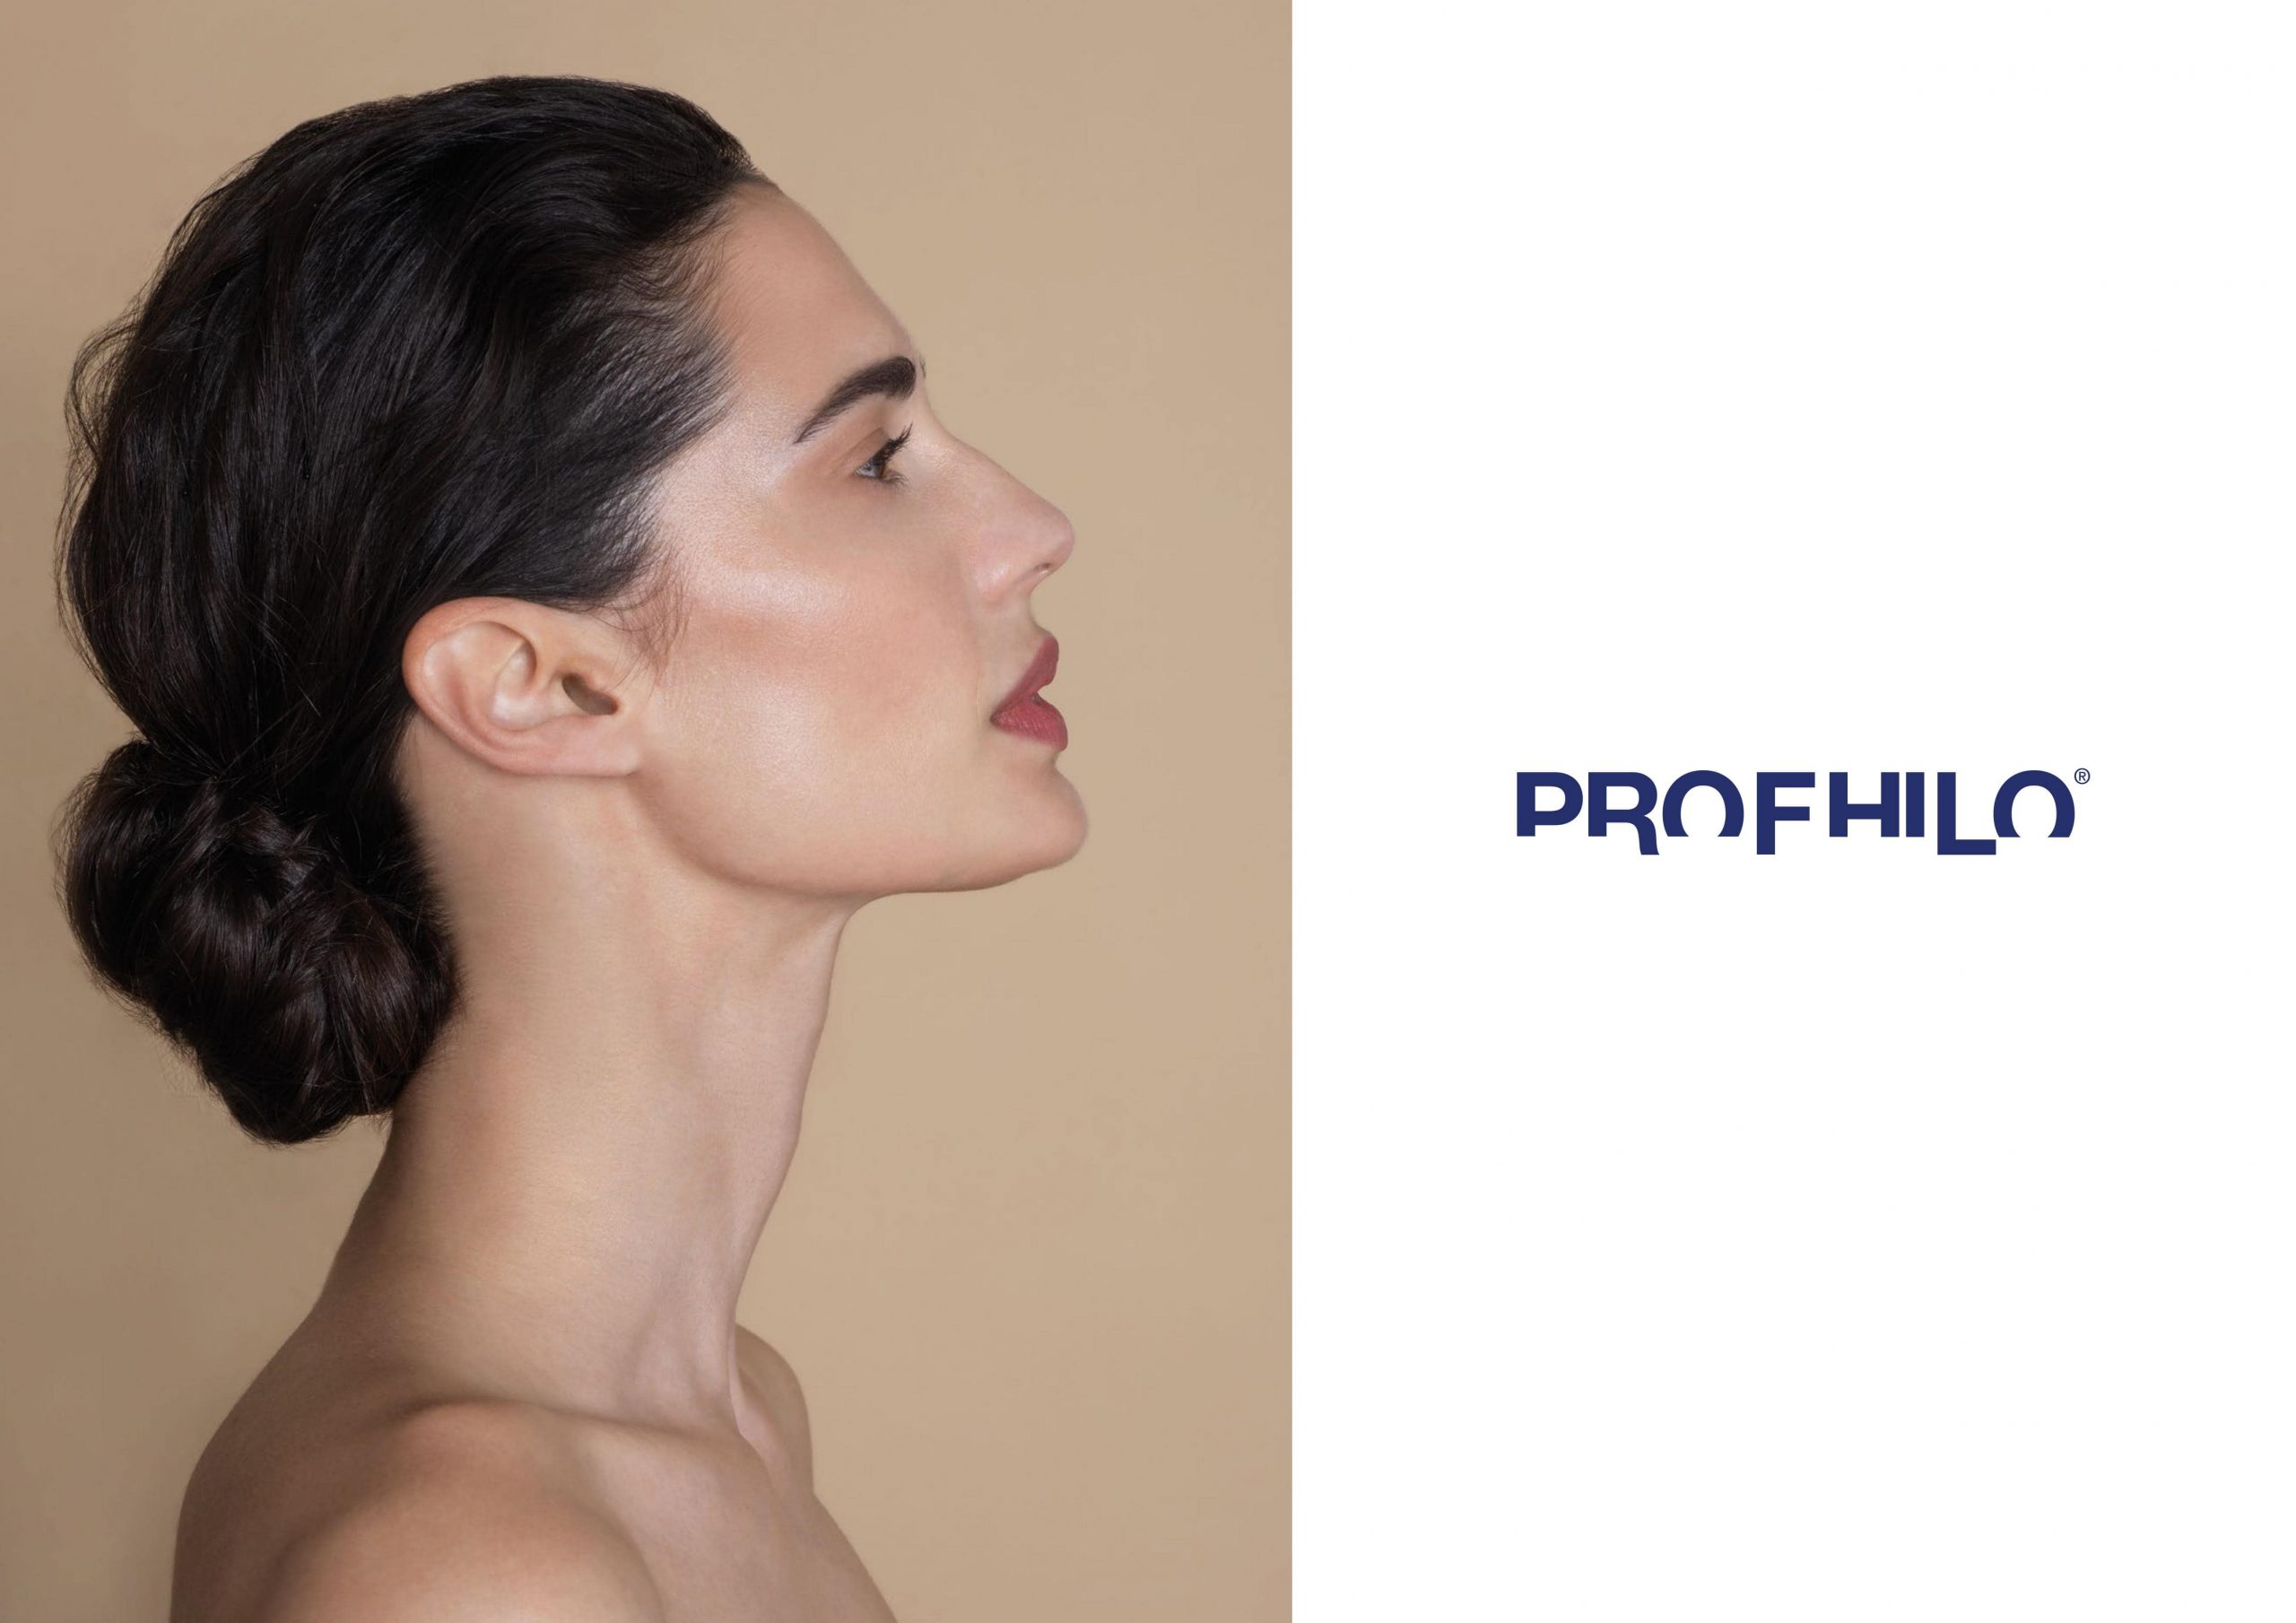 Profhilo Treatment - CoLaz Aesthetics Clinic